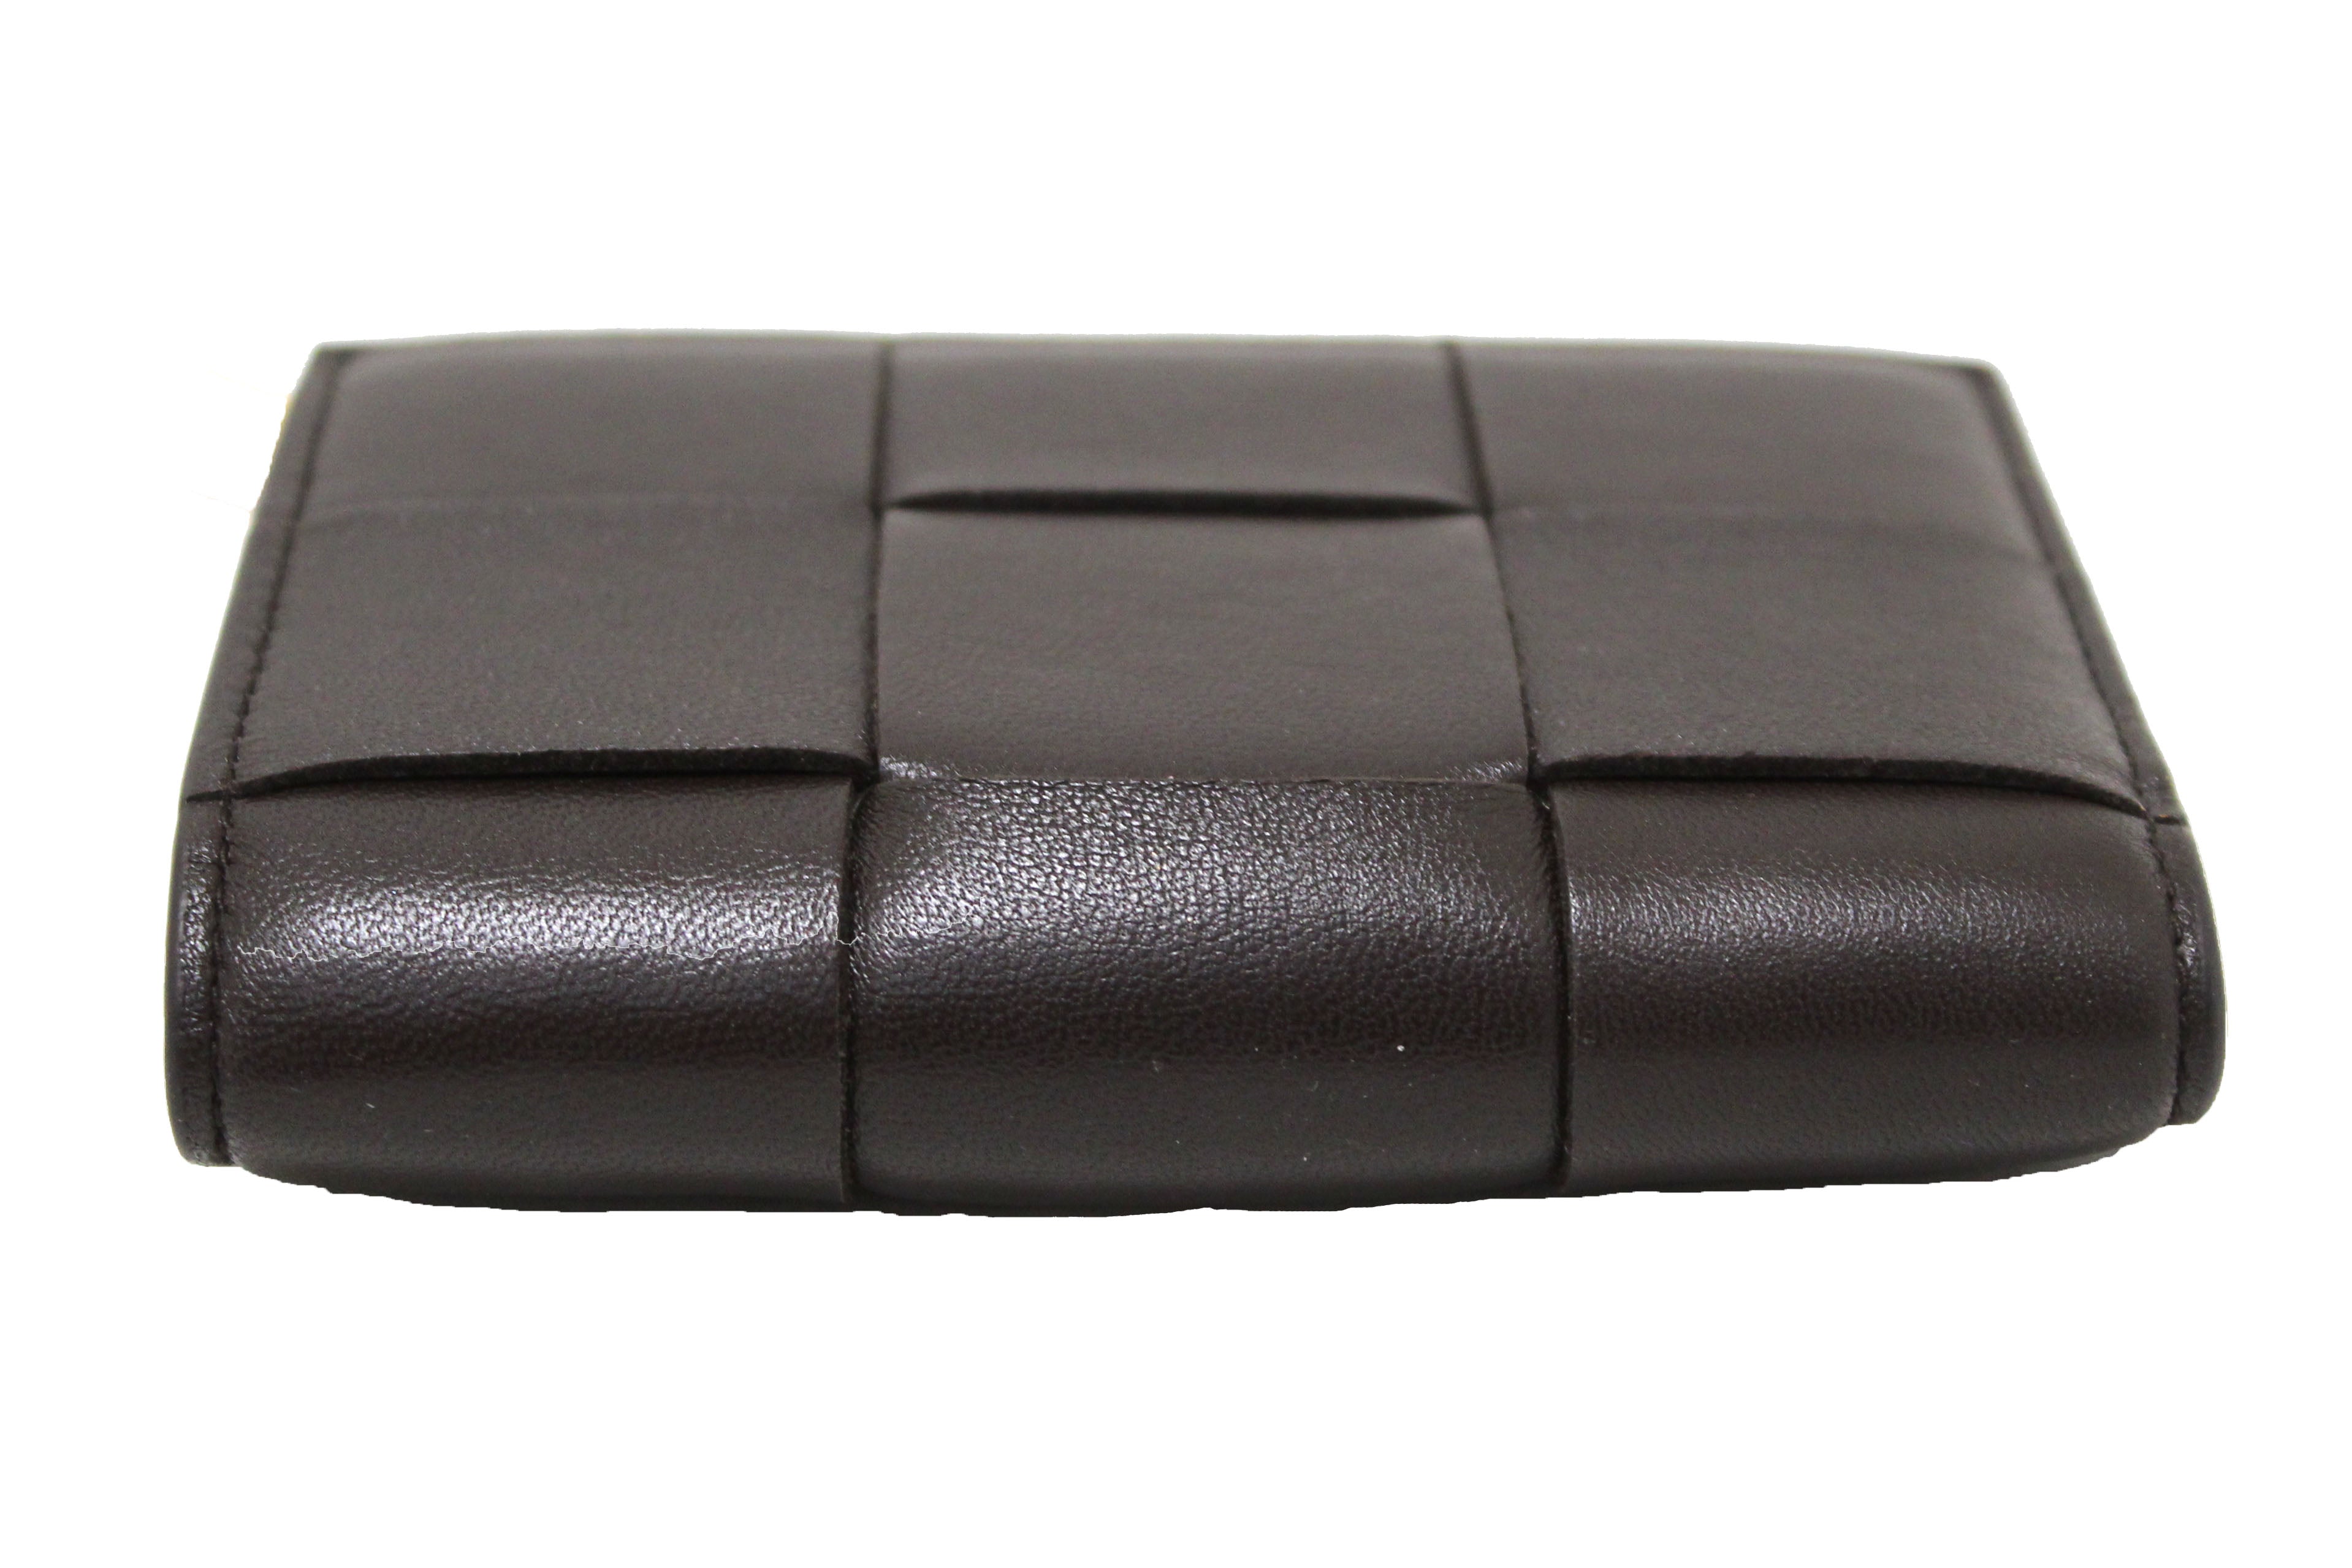 Authentic Bottega Veneta Brown Intreccio Leather Small Bi-Fold Zip Wallet